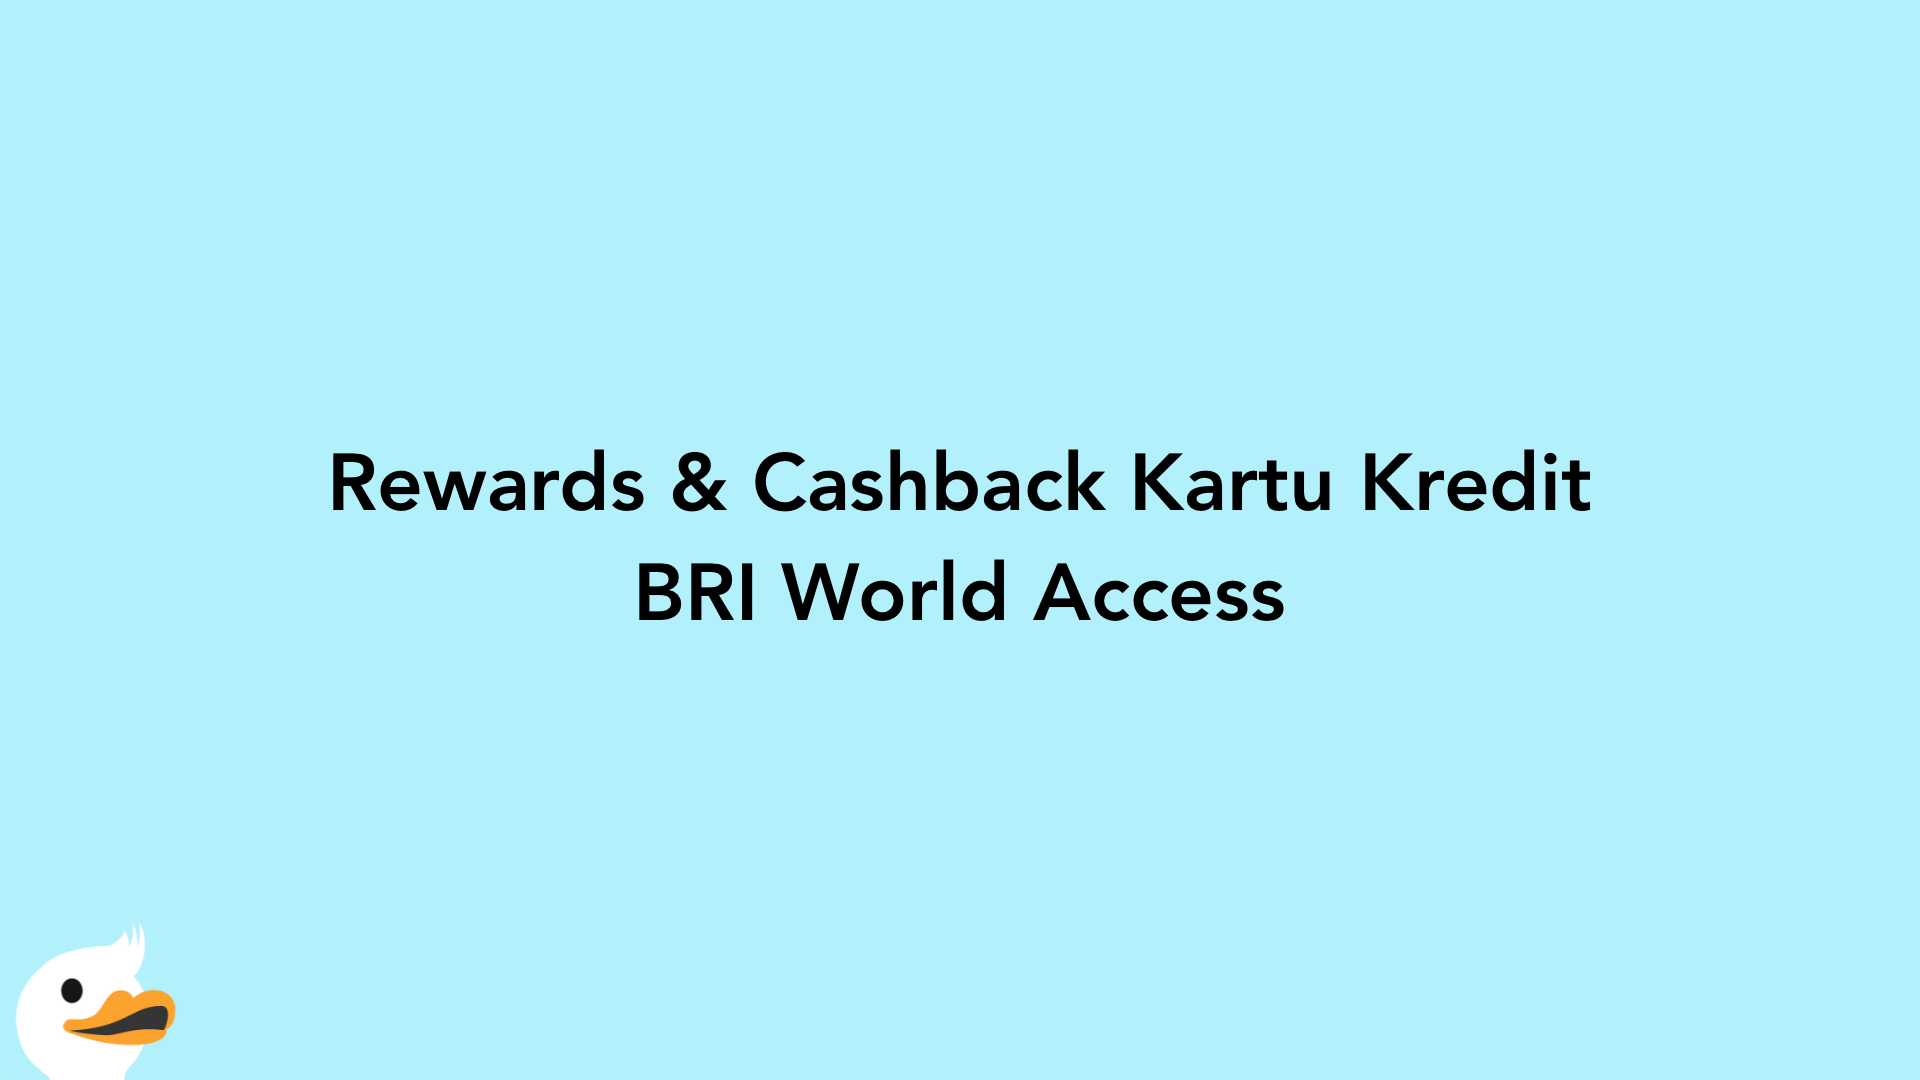 Rewards & Cashback Kartu Kredit BRI World Access